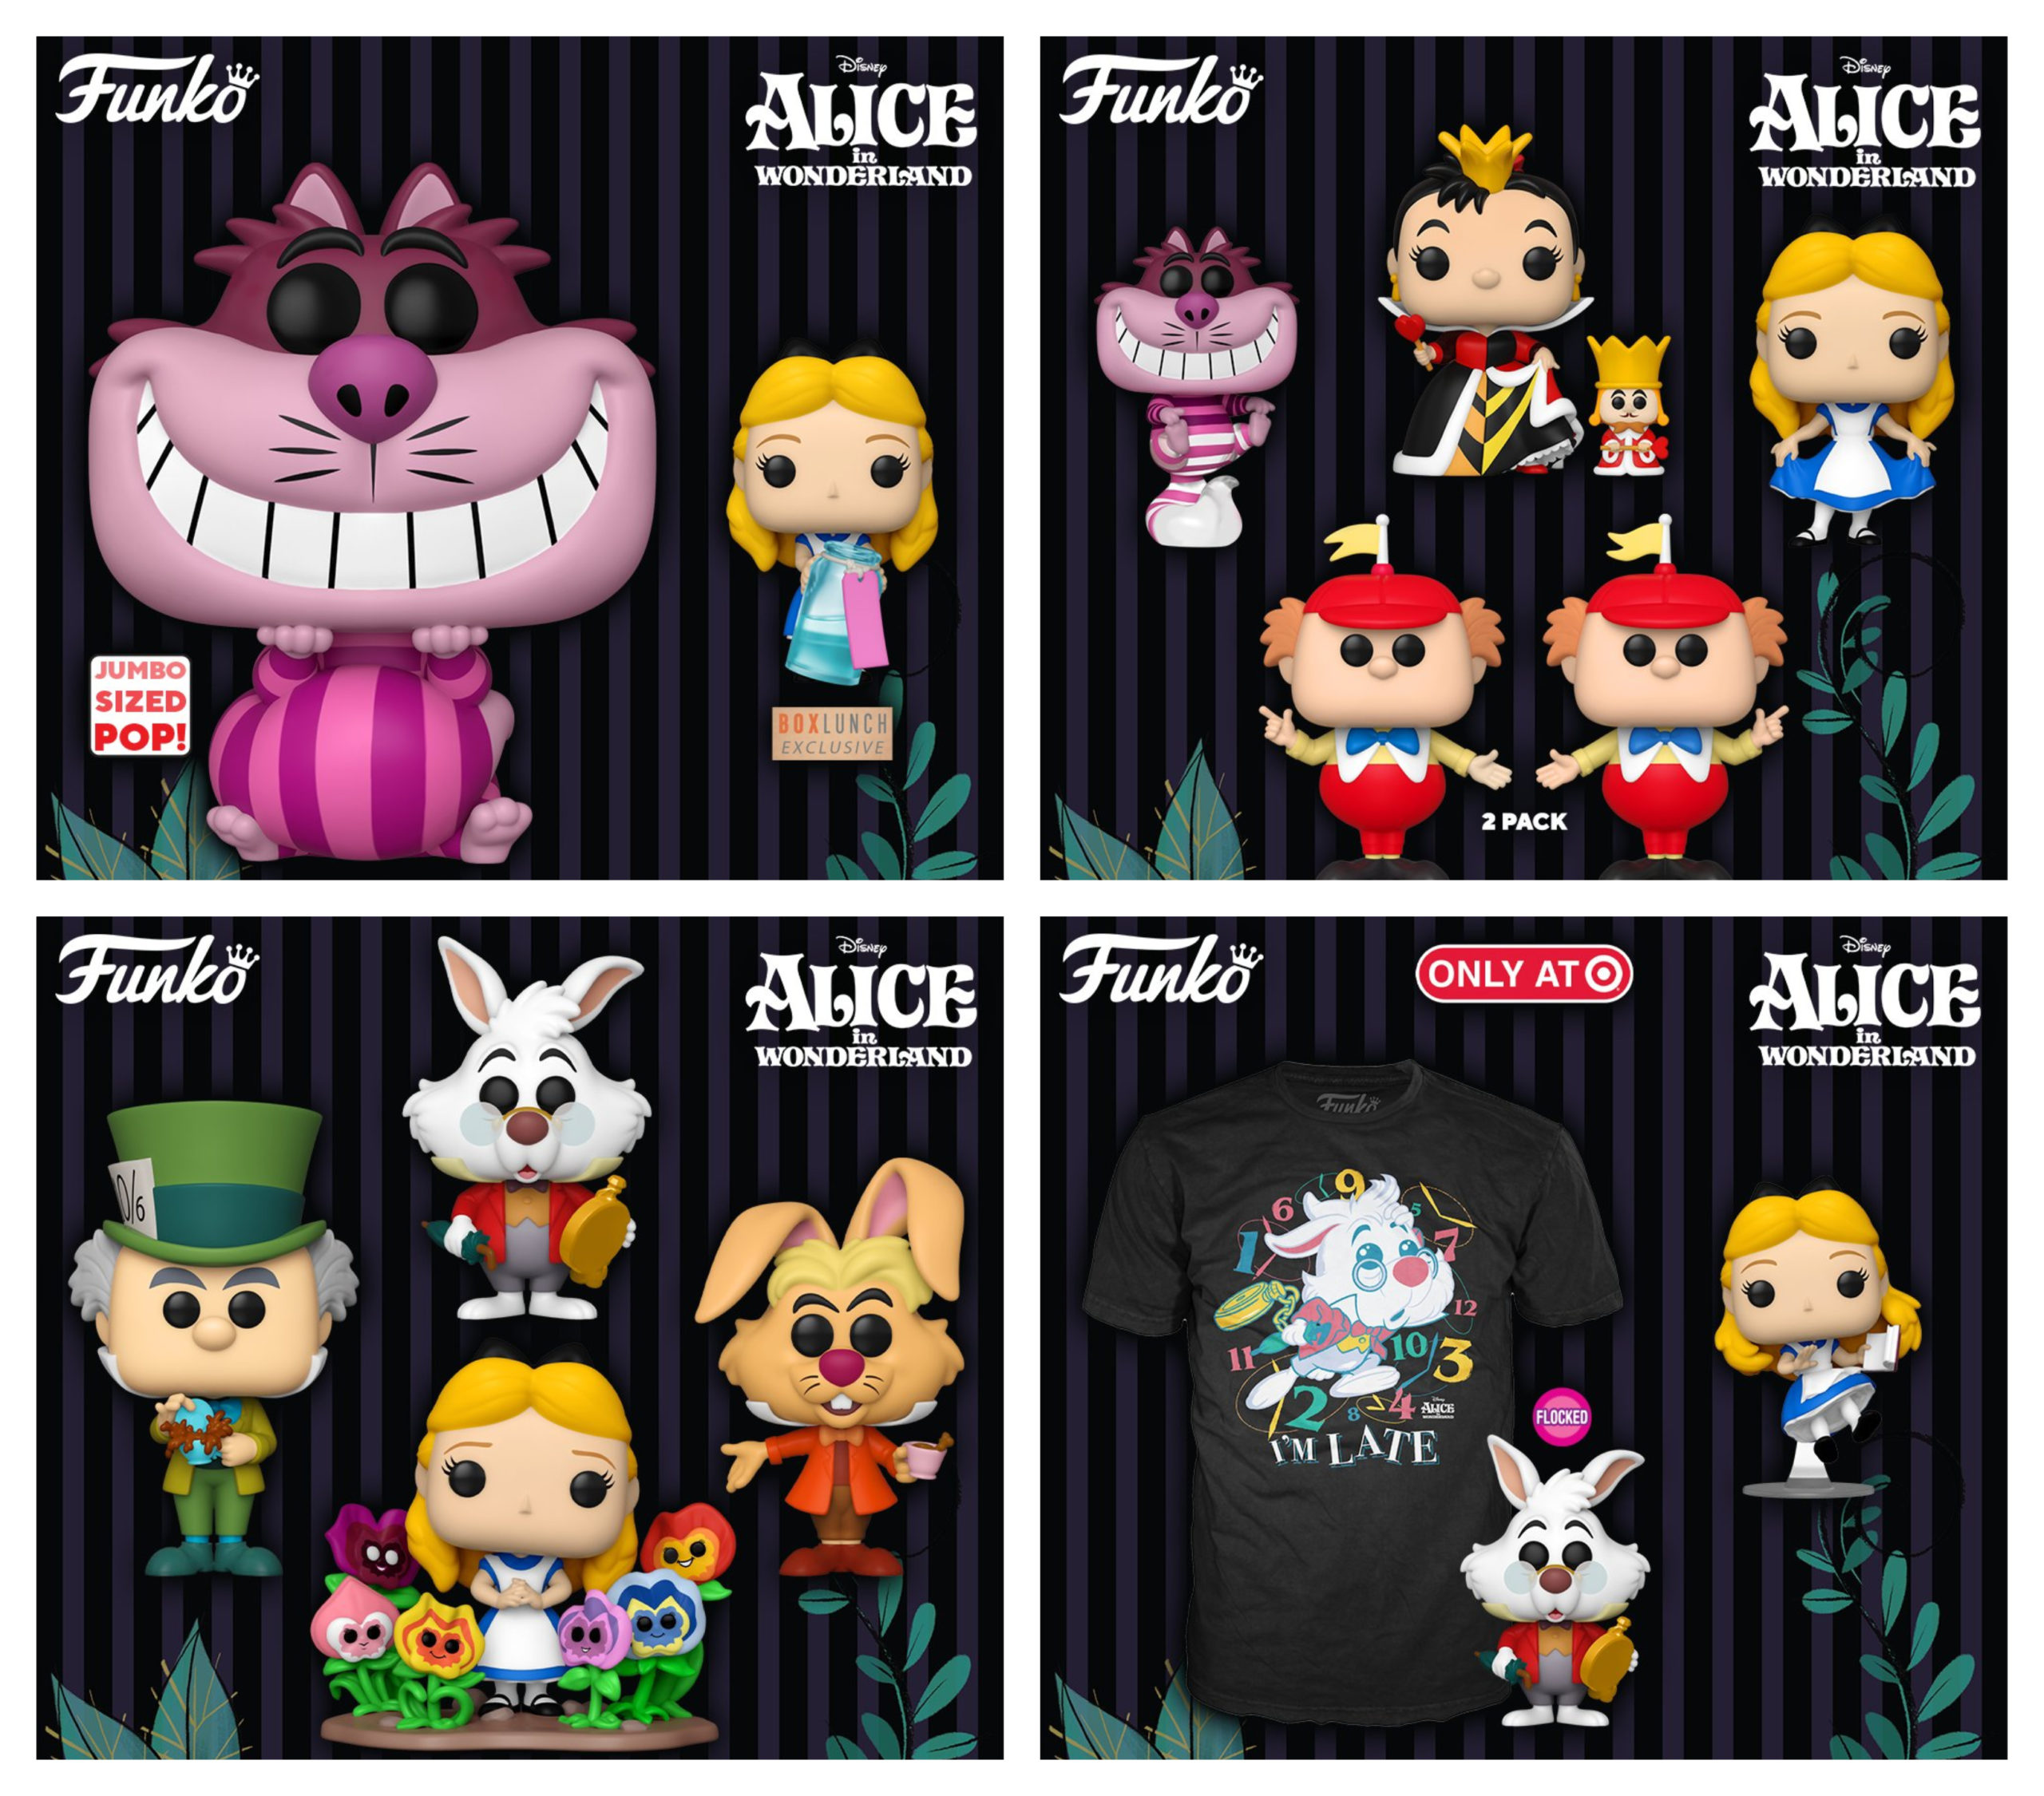 Disney S Alice In Wonderland Th Anniversary Funko Pop Vinyls Revealed MickeyBlog Com